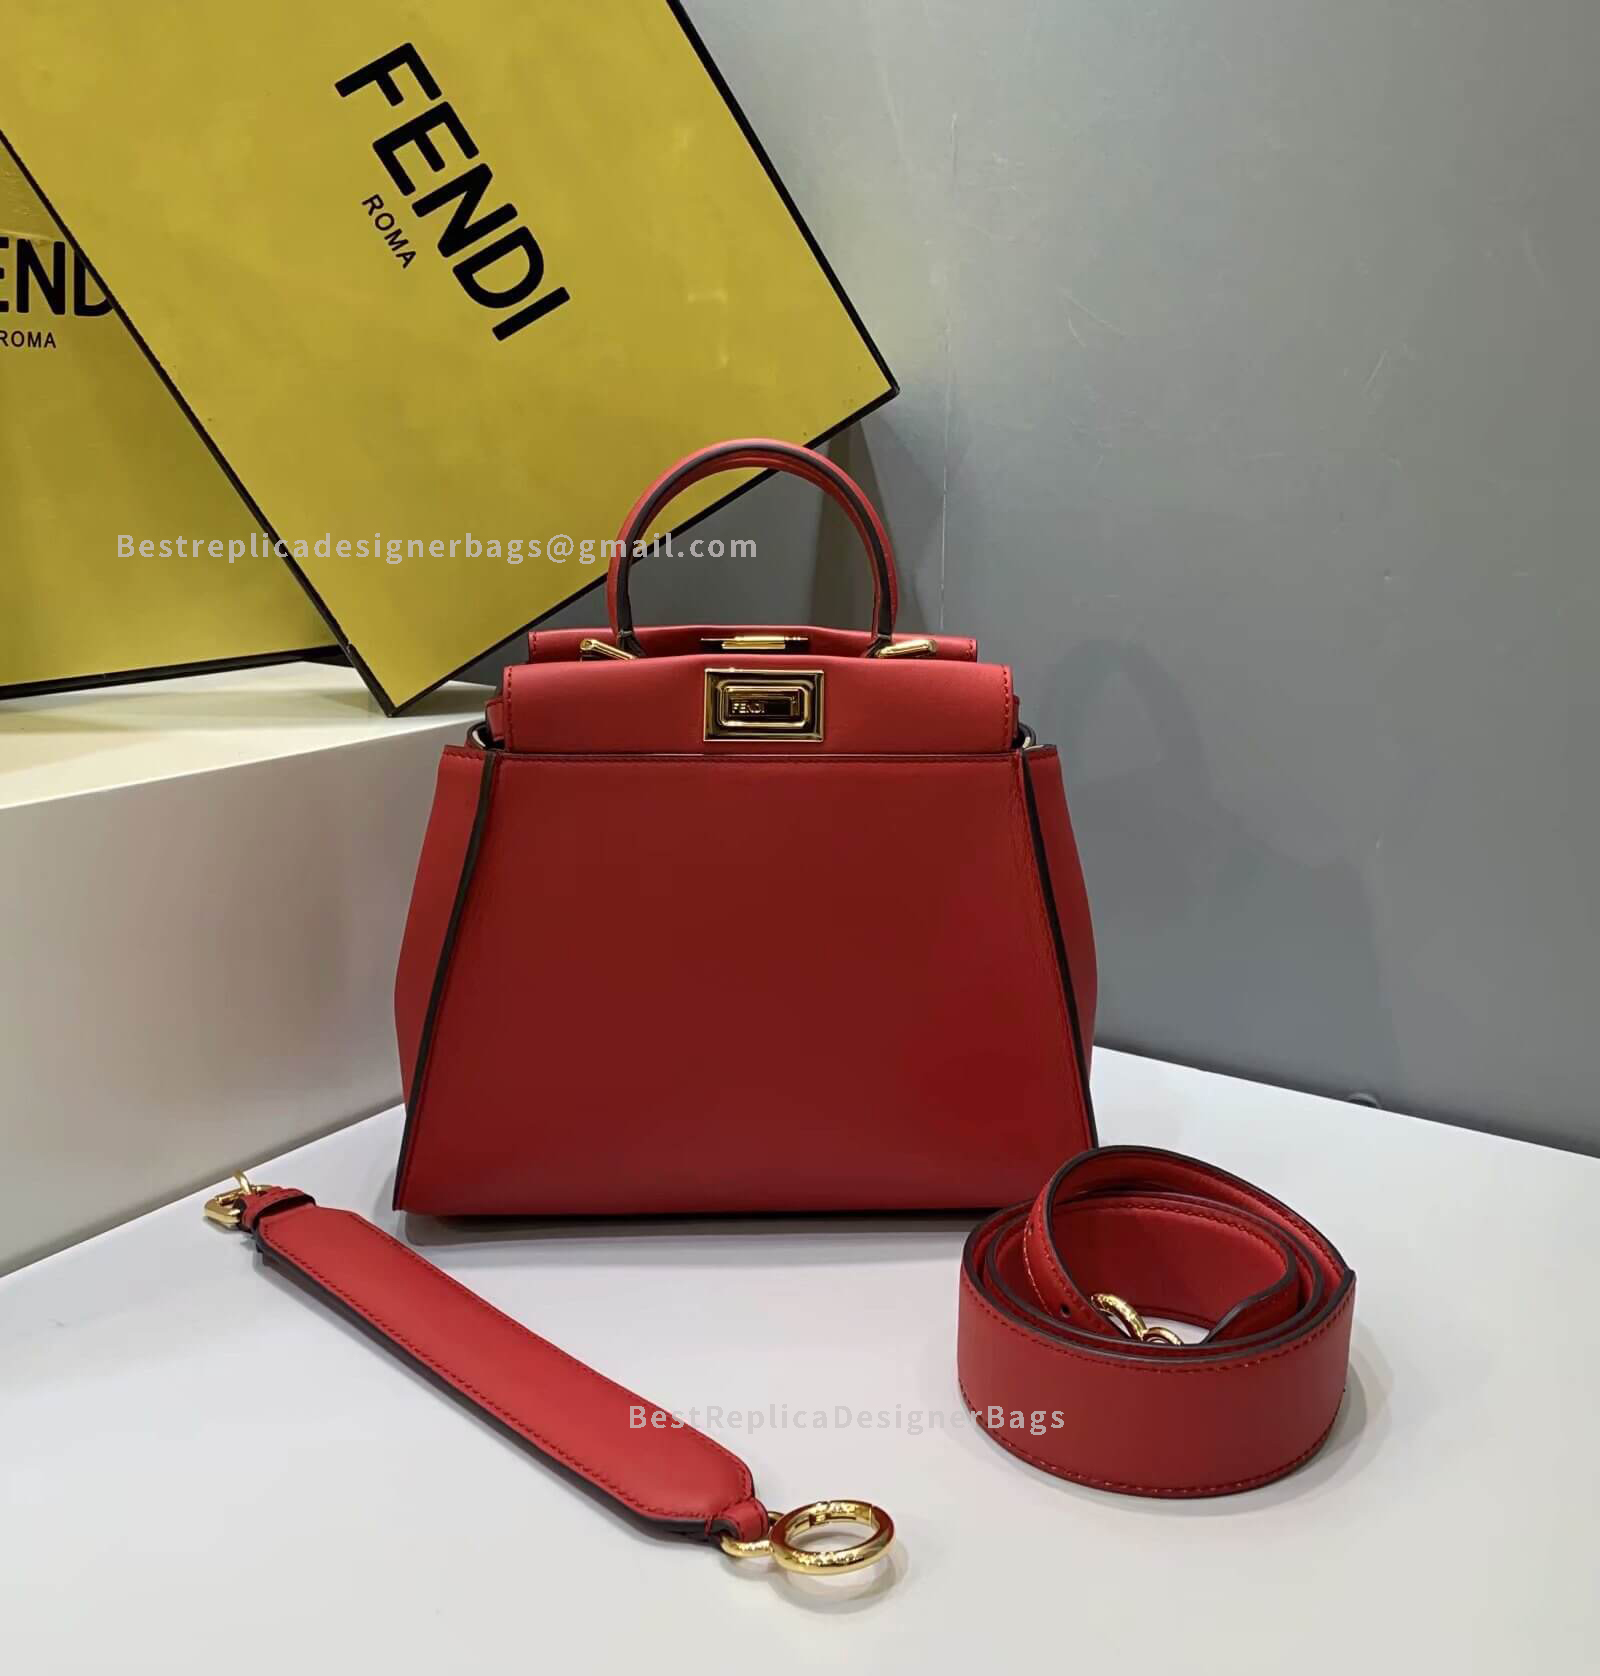 Fendi Peekaboo Iconic Medium Red Leather Bag 2121M